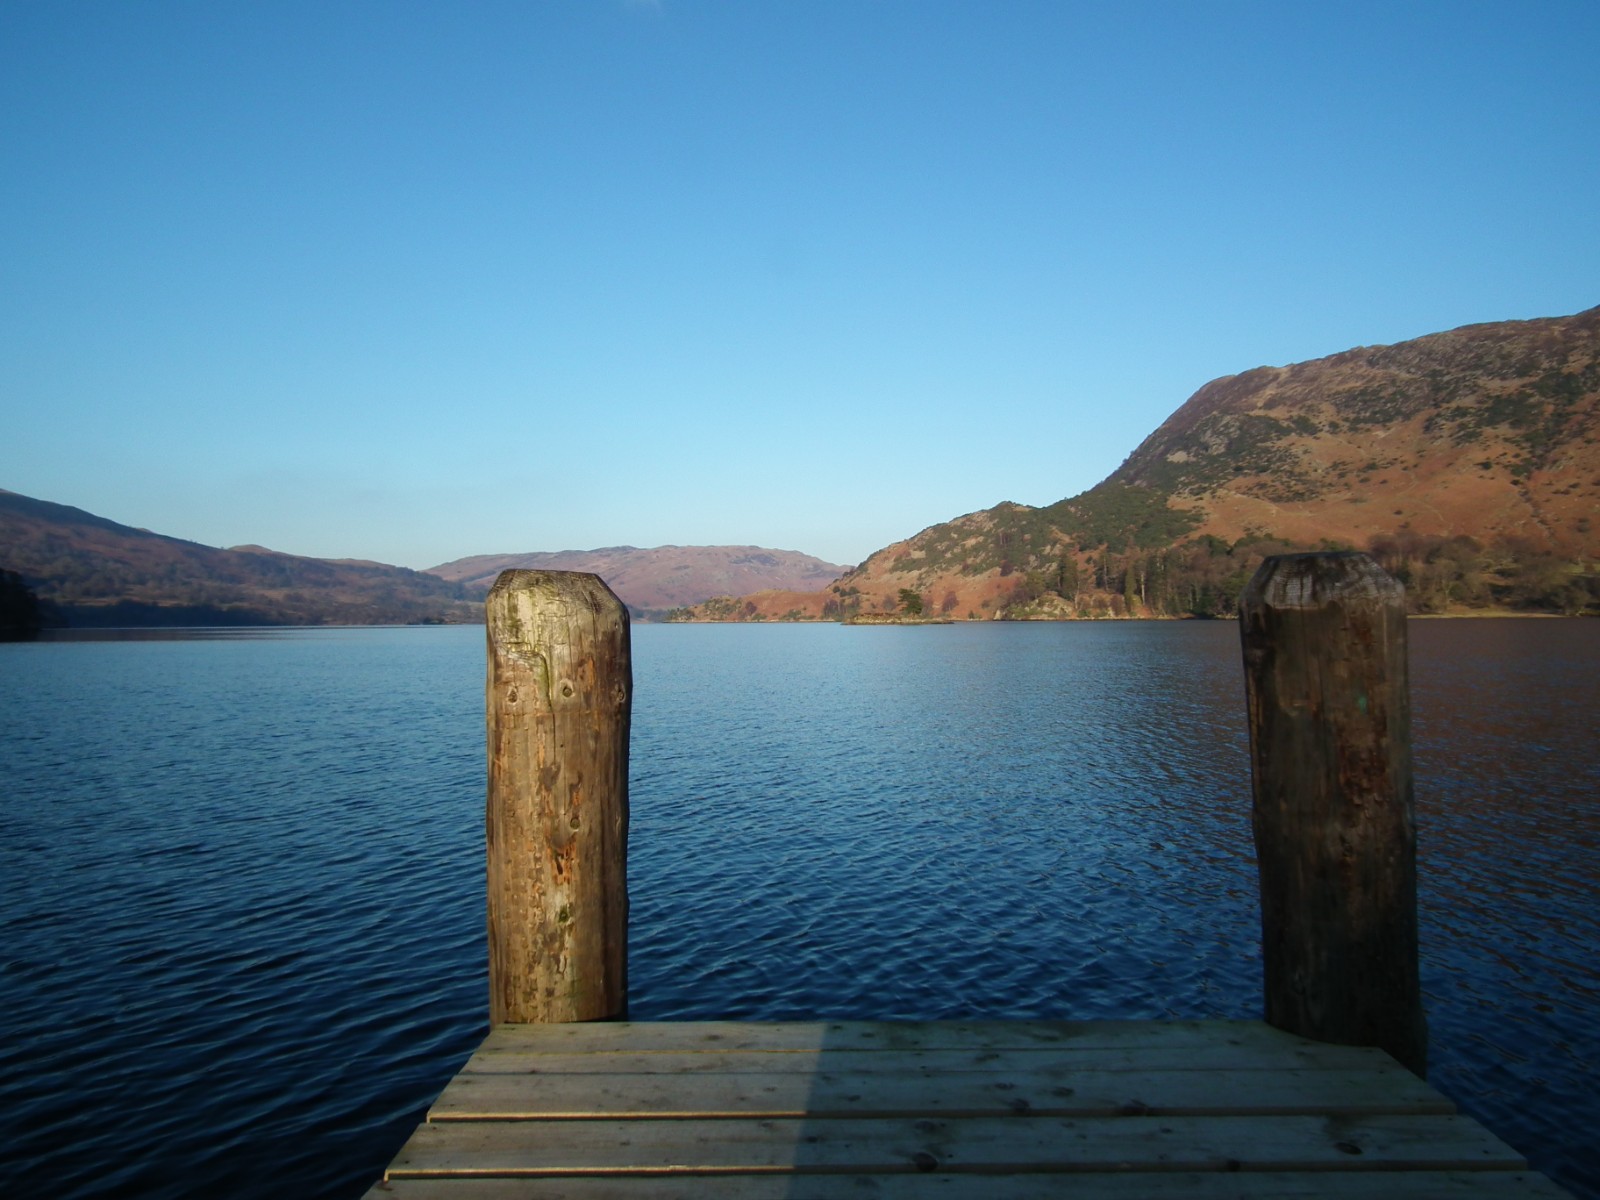 Ullswater tranquility, Ullswater | Lake | Lake District | Tranquil | Water | Blue | Mountain | Wood | Pier | Boardwalk | Jetty | Sky | Reflection